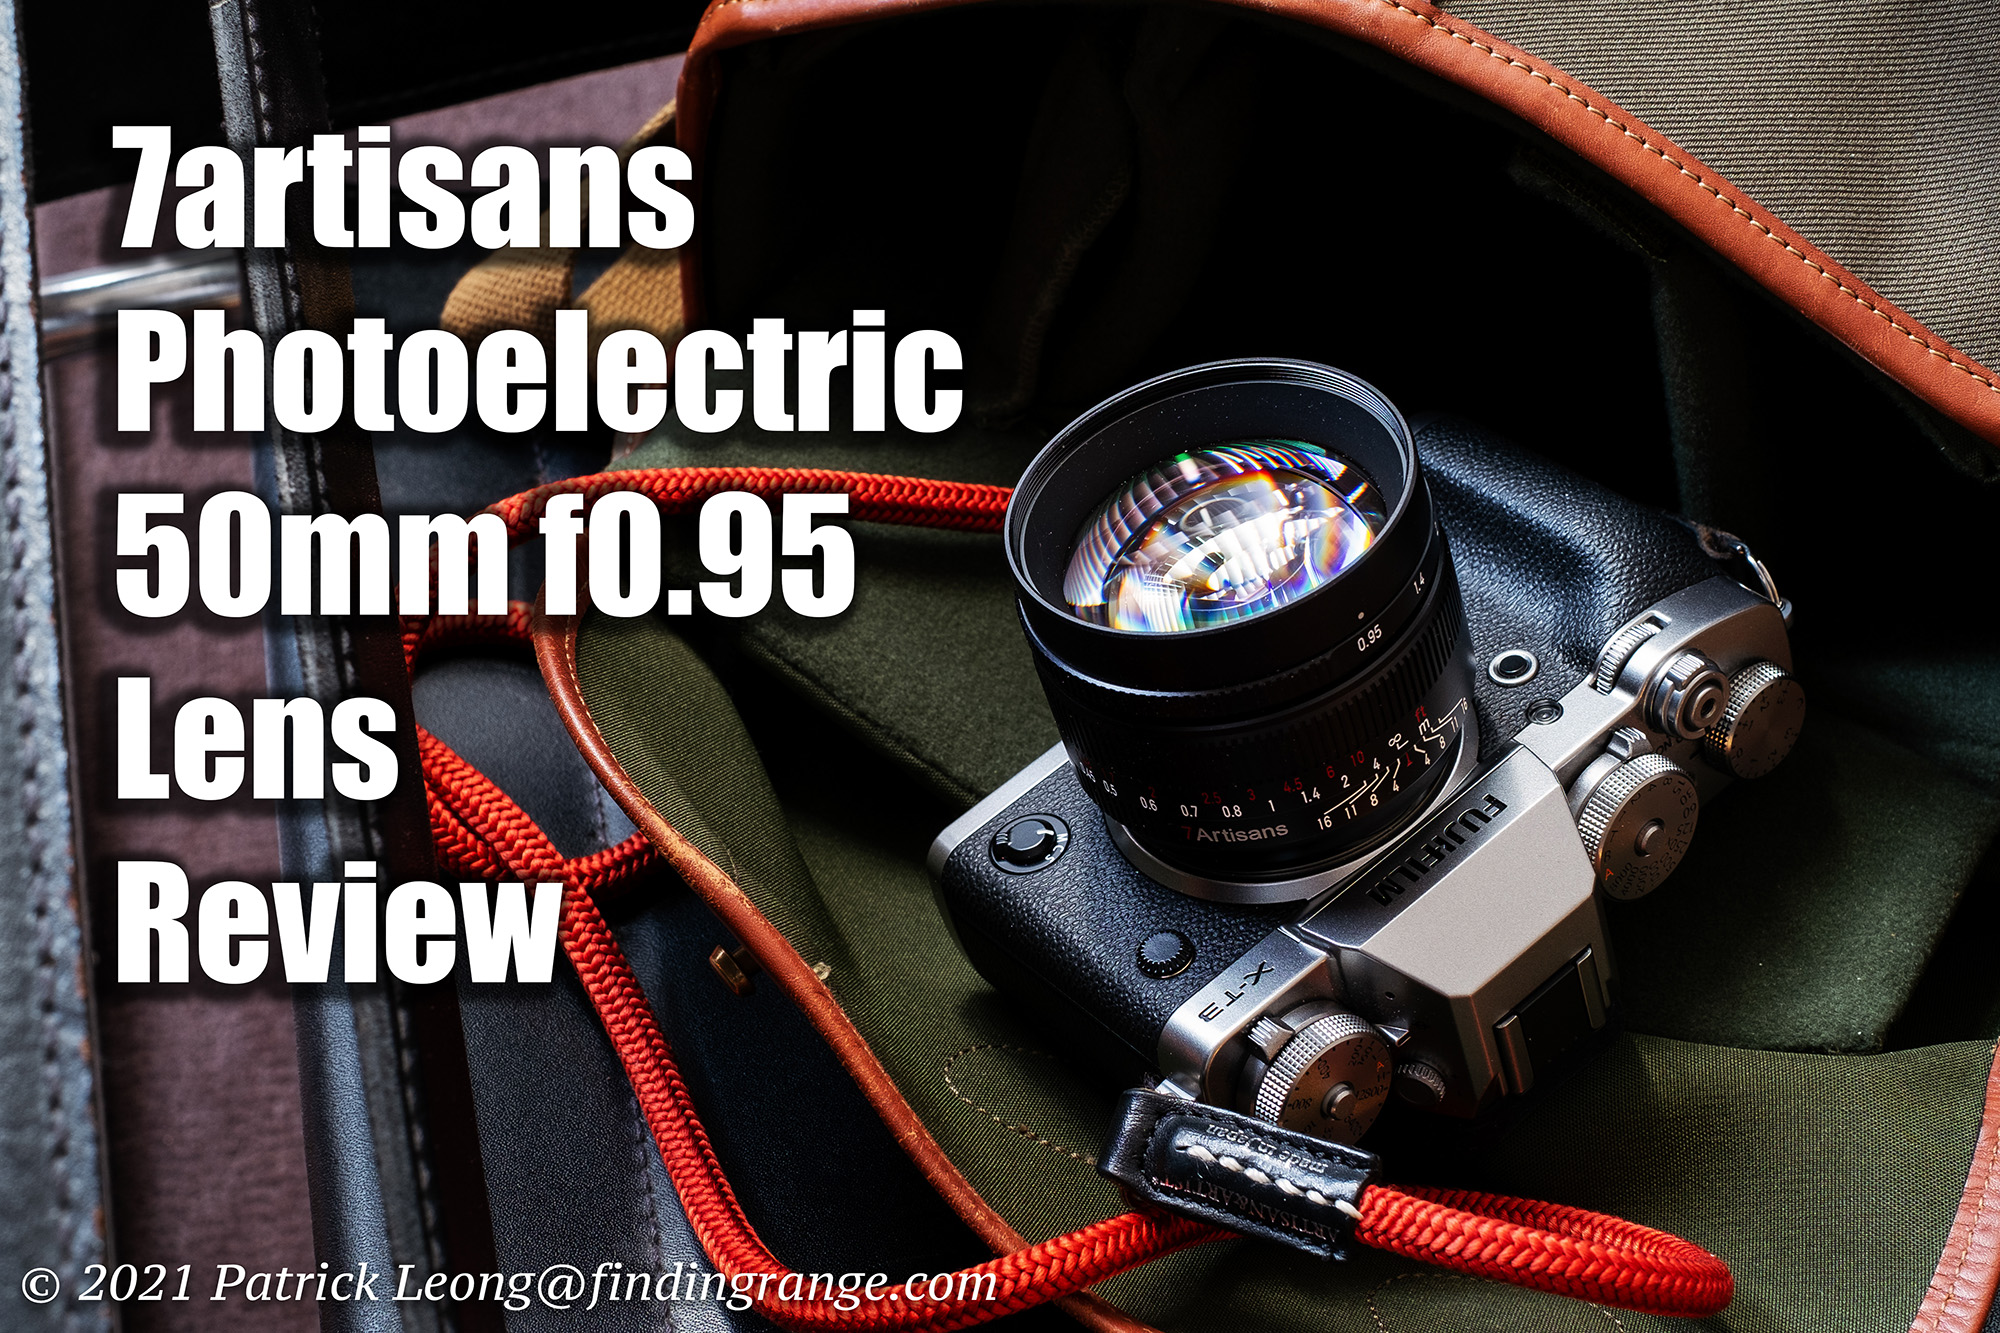 7artisans Photoelectric 50mm f0.95 Lens Review - Finding Range